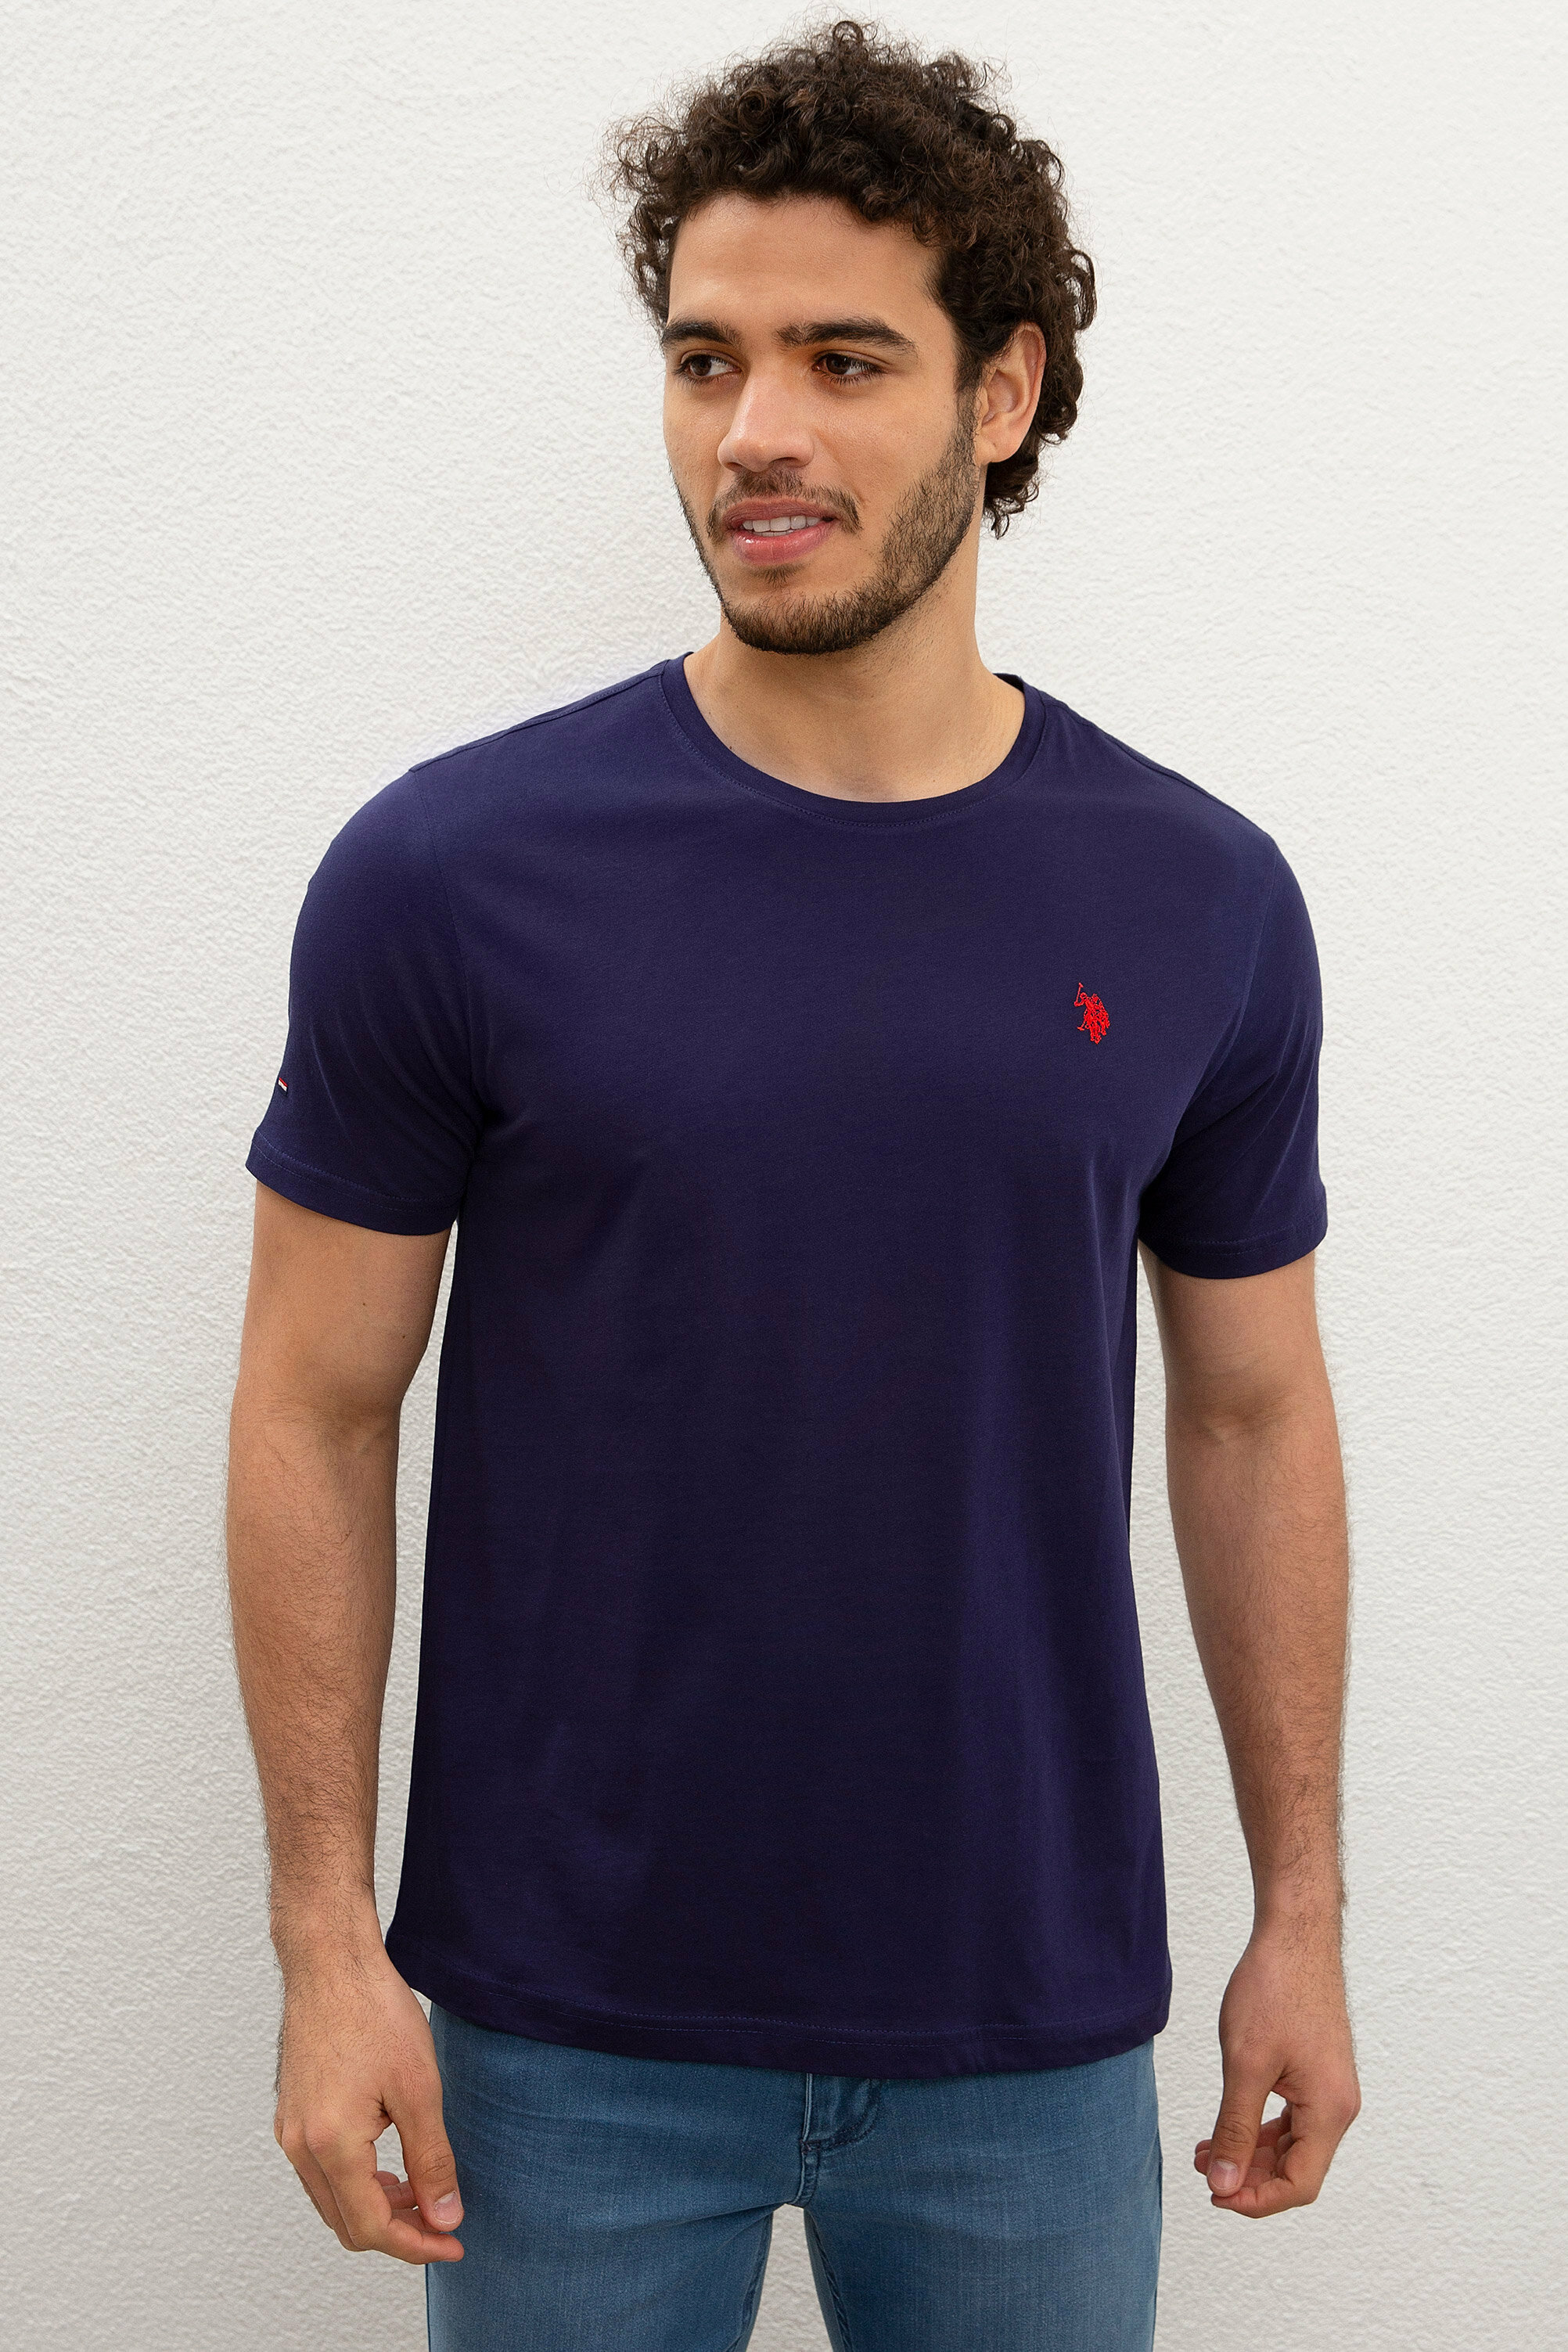 U.S POLO ASSN Men's Sleepwear Tshirt. - buy in bulk on Qoovee Market